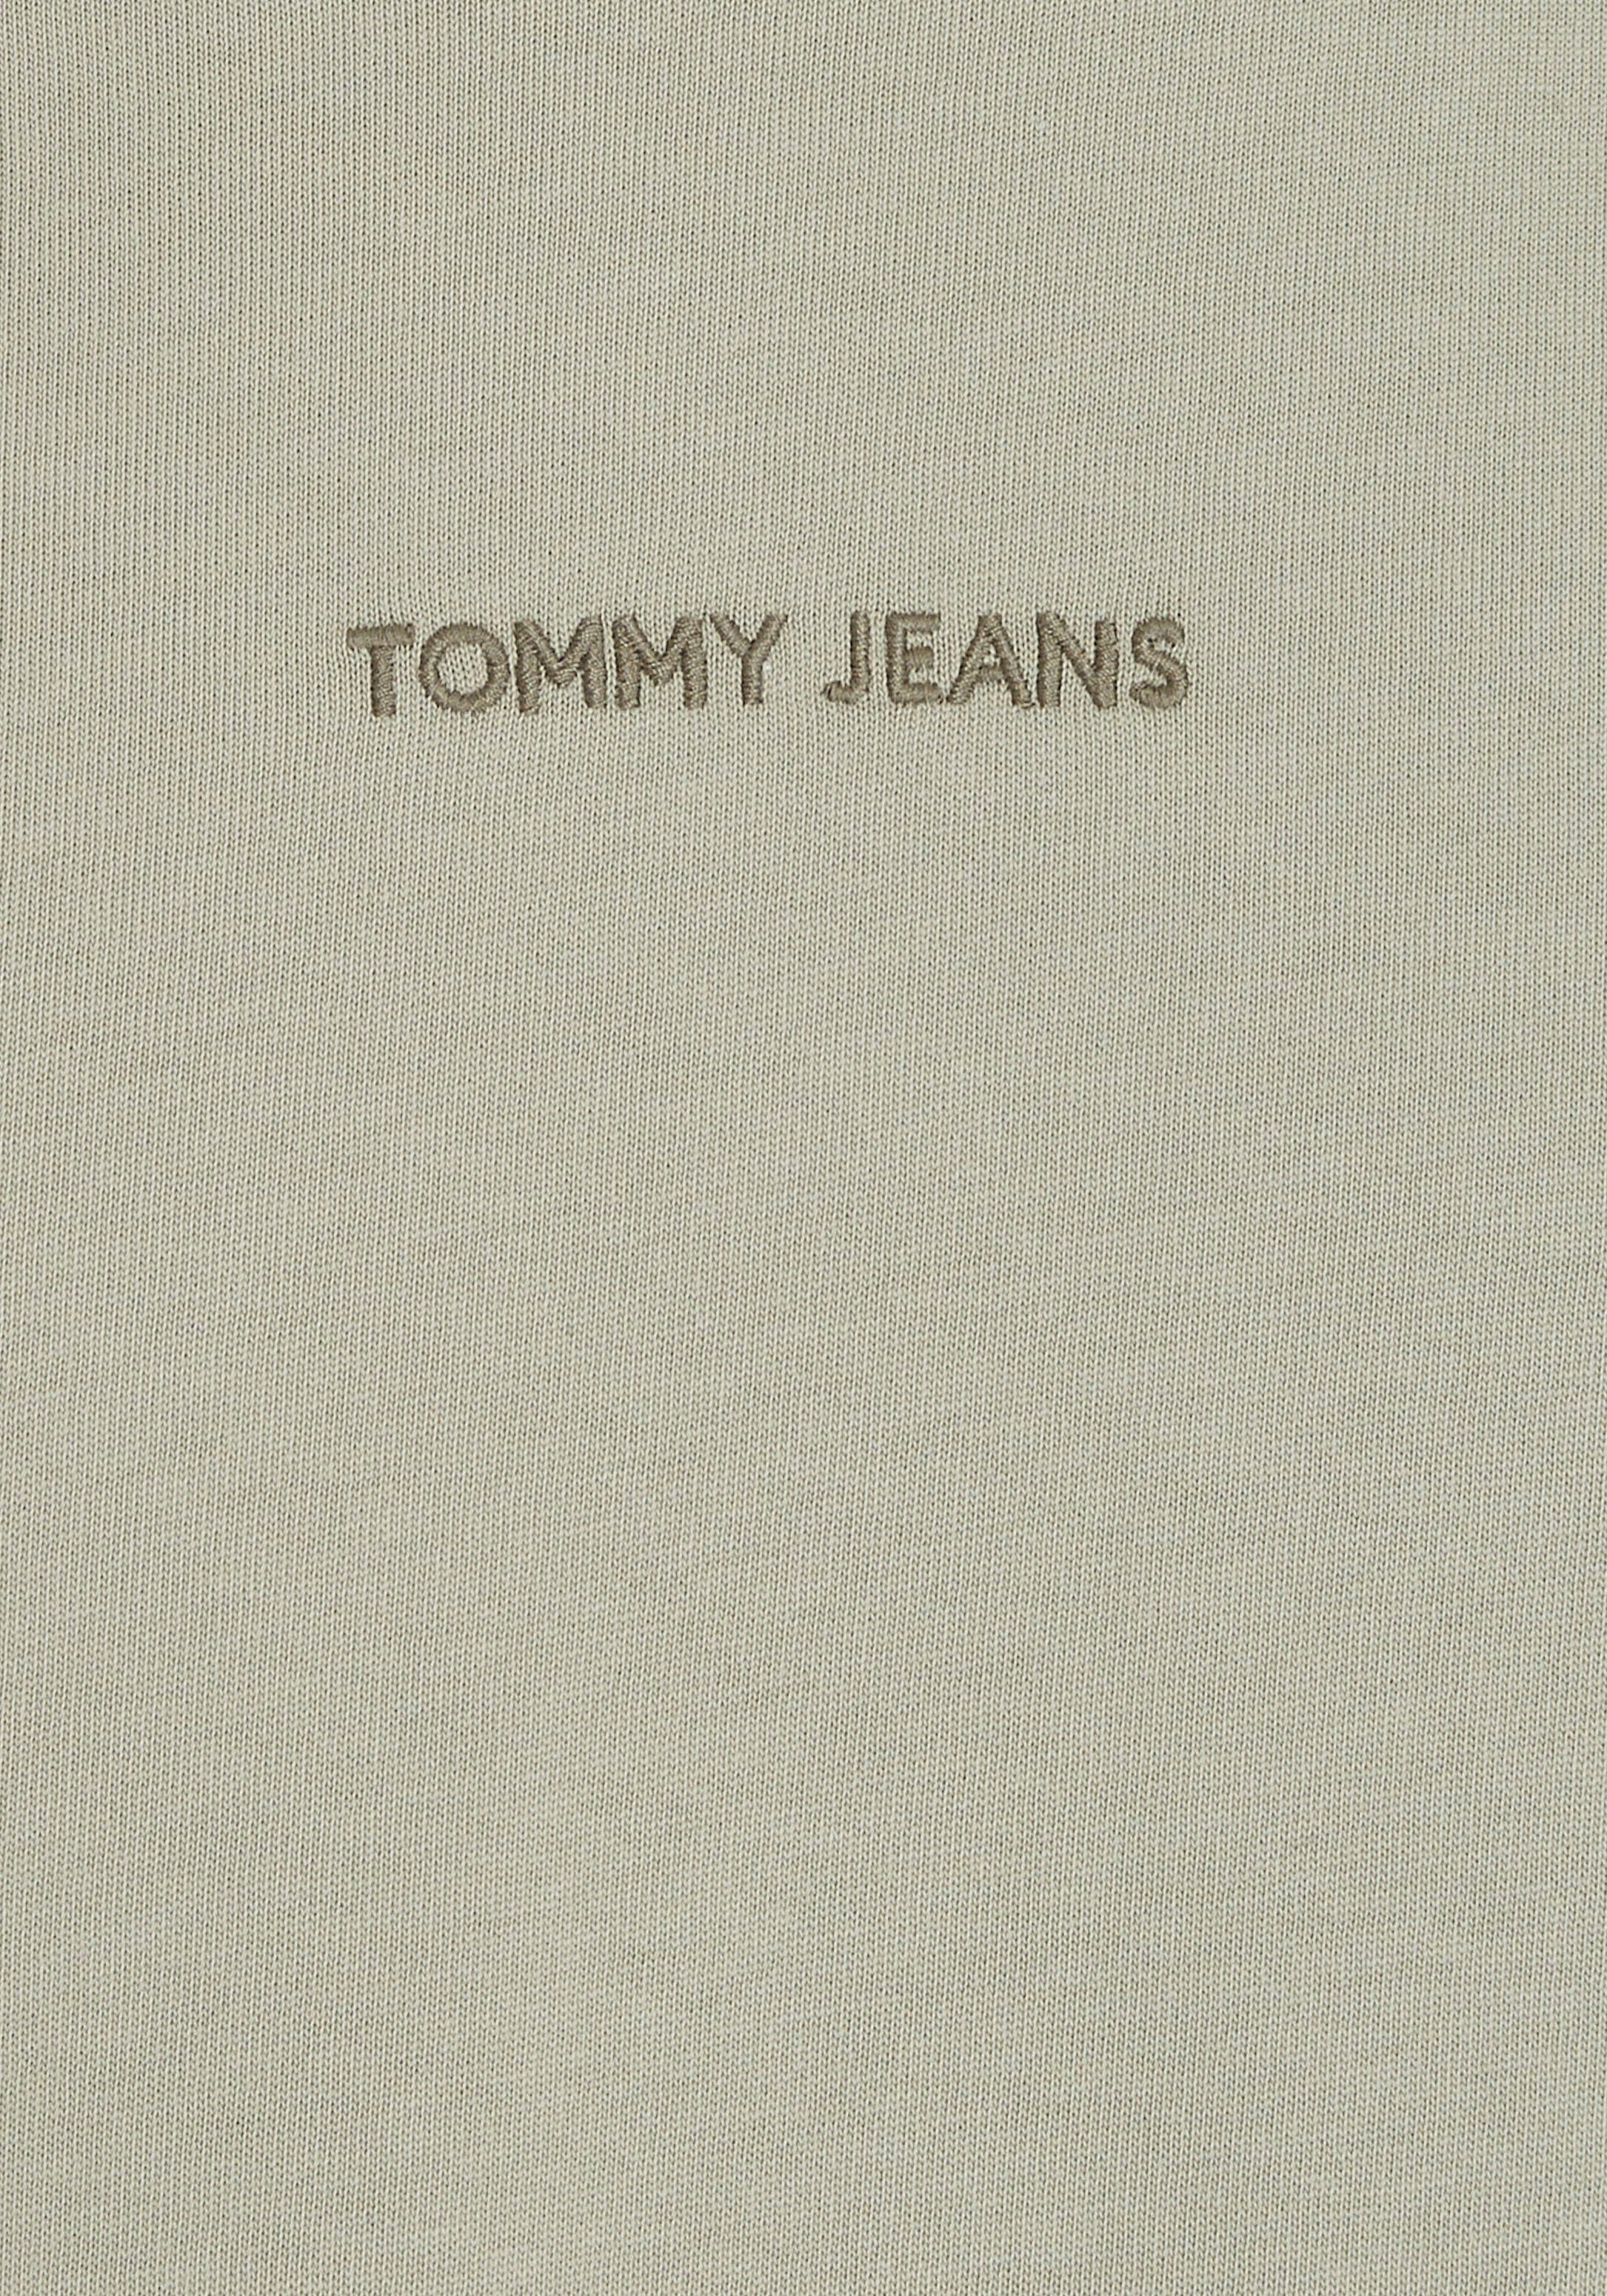 TOMMY JEANS T-shirt TJM REG S NEW CLASSICS TEE EXT